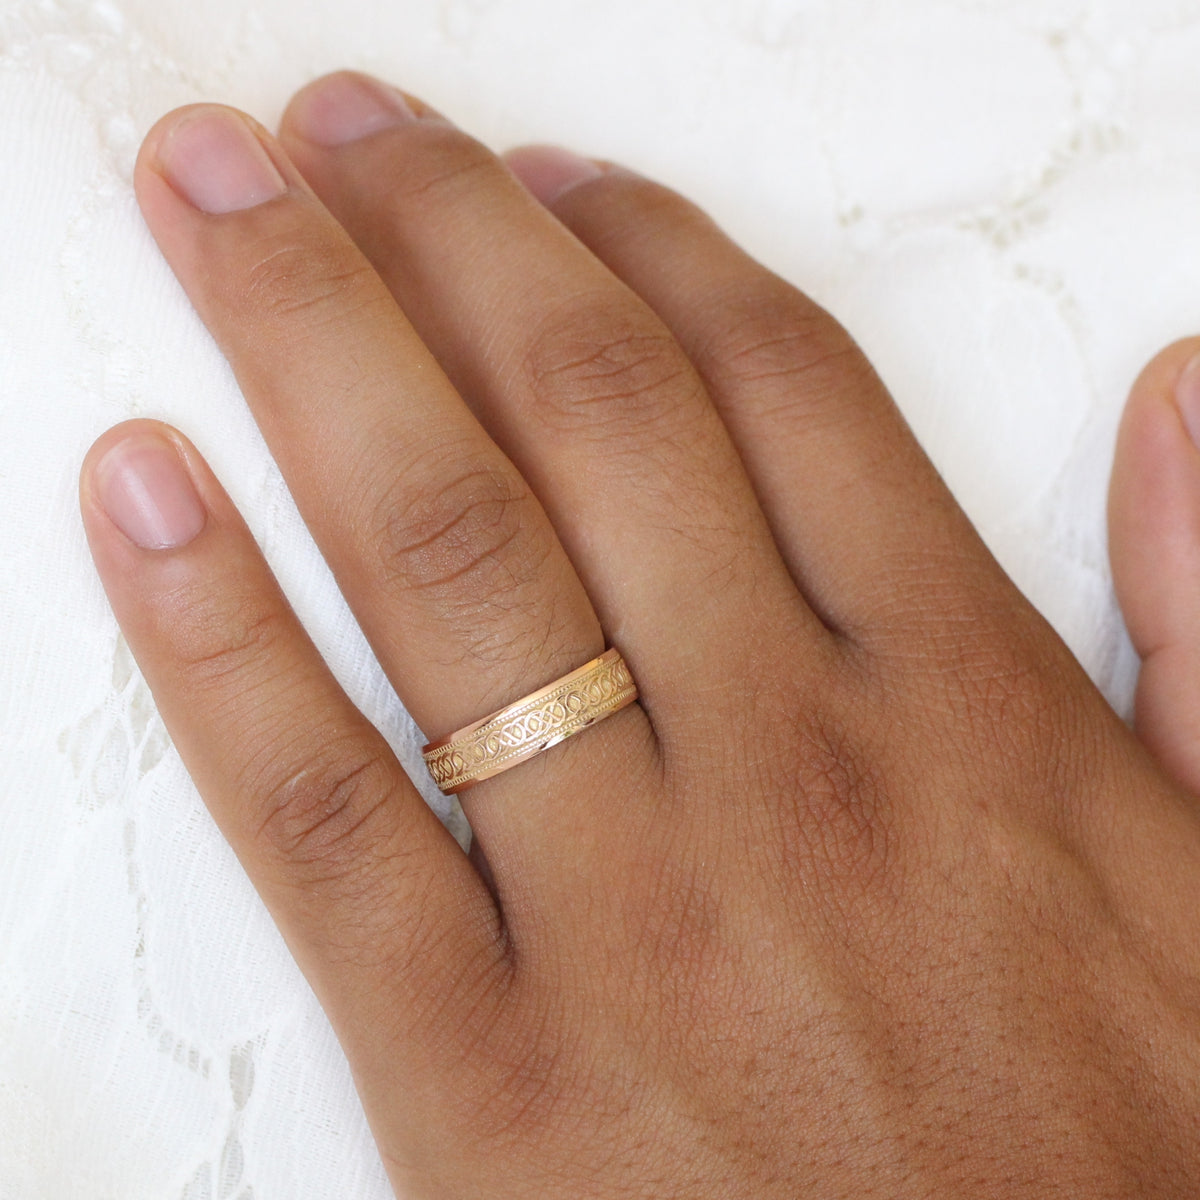 Celtic Knot Wedding Band Rose Gold Eternity Mens Wedding Ring la more design jewelry 